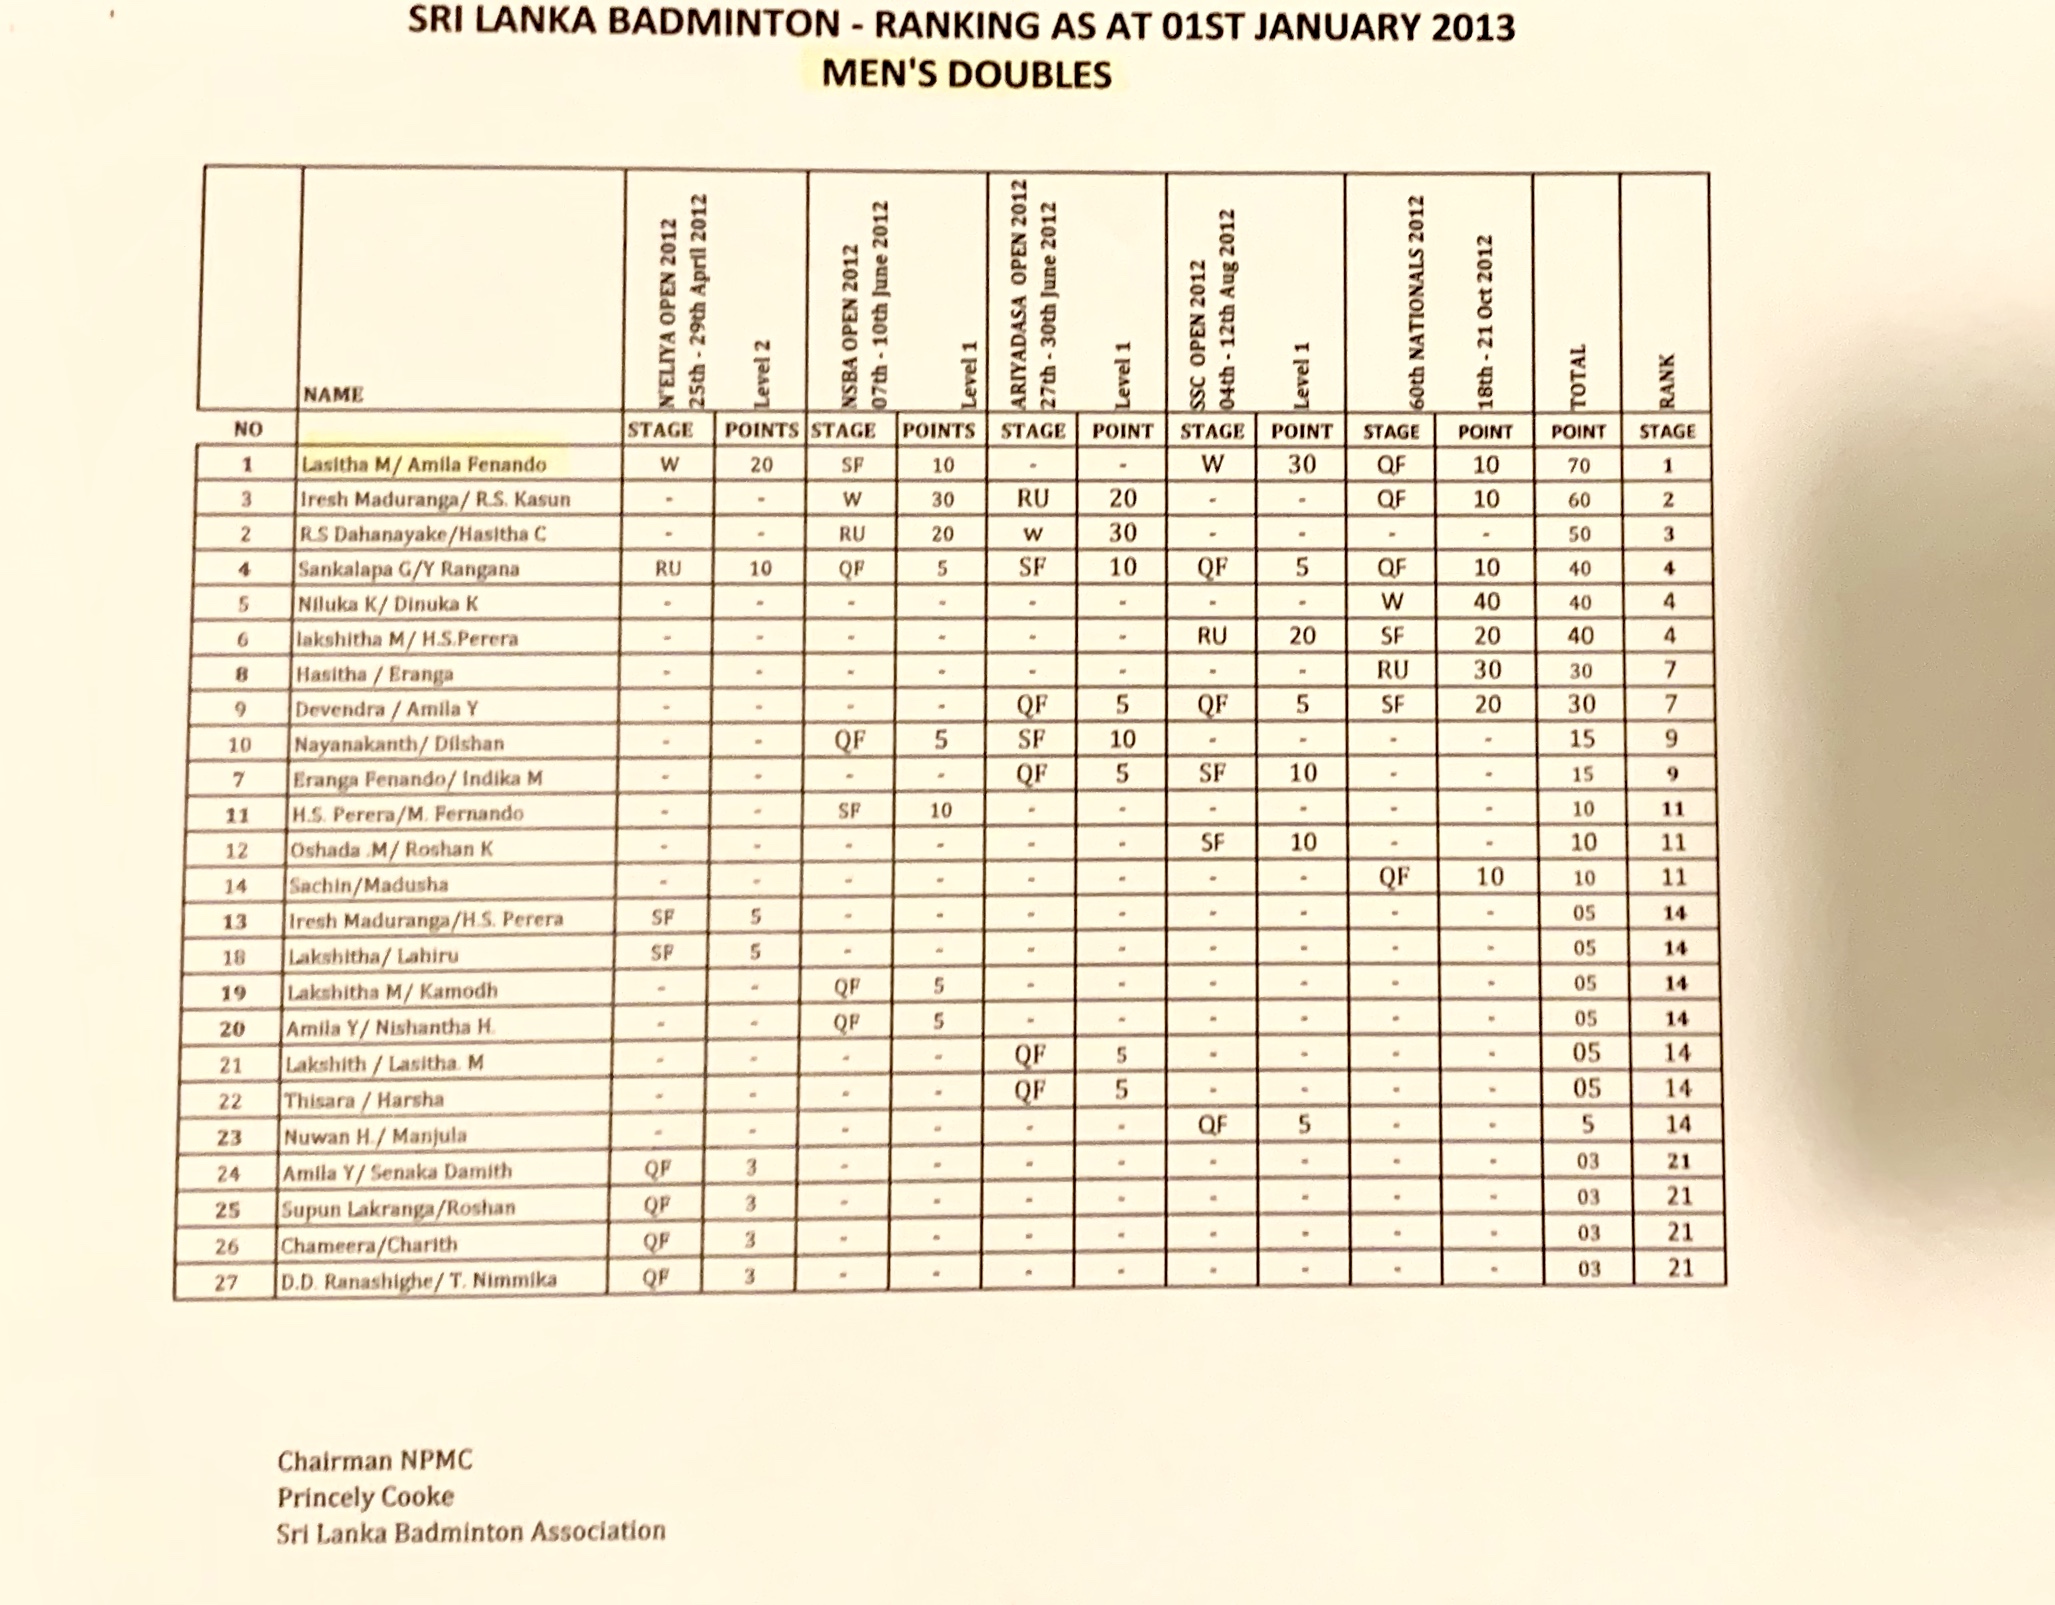 Nations Rankings of Men’s doubles Sri Lanka 